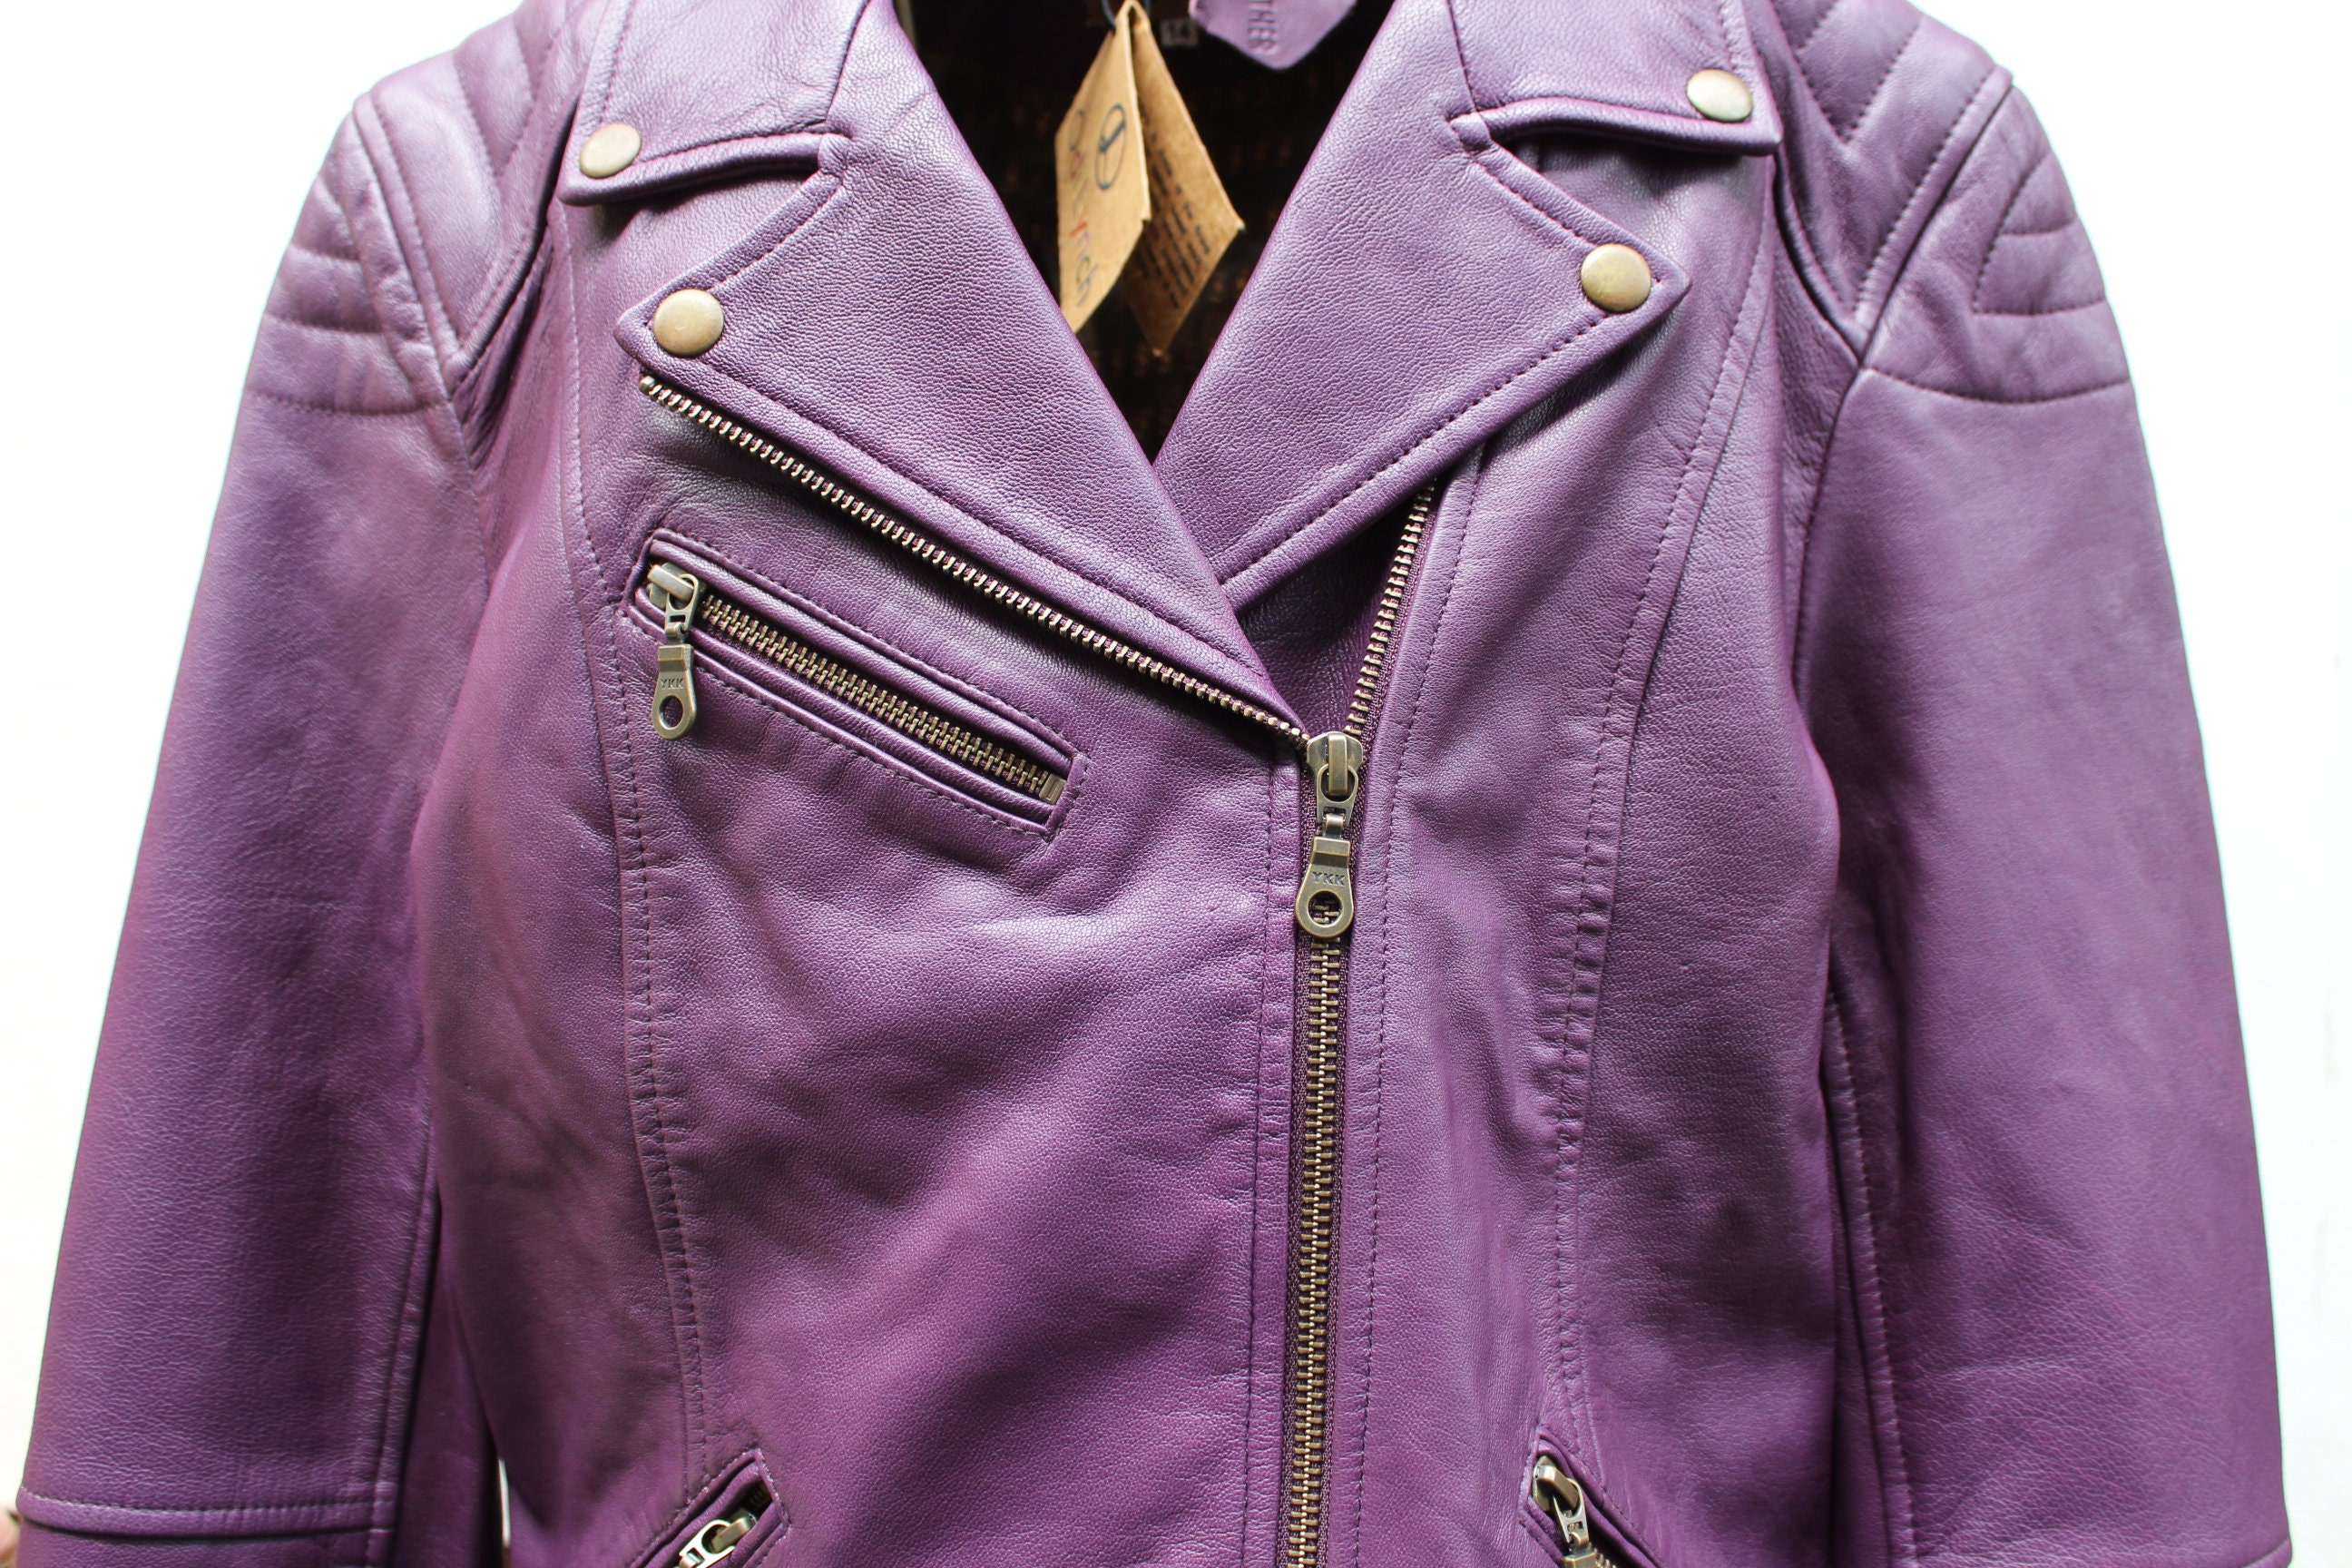 Biker Jacket Hard Purple Genuine Leather in Vintage Style 